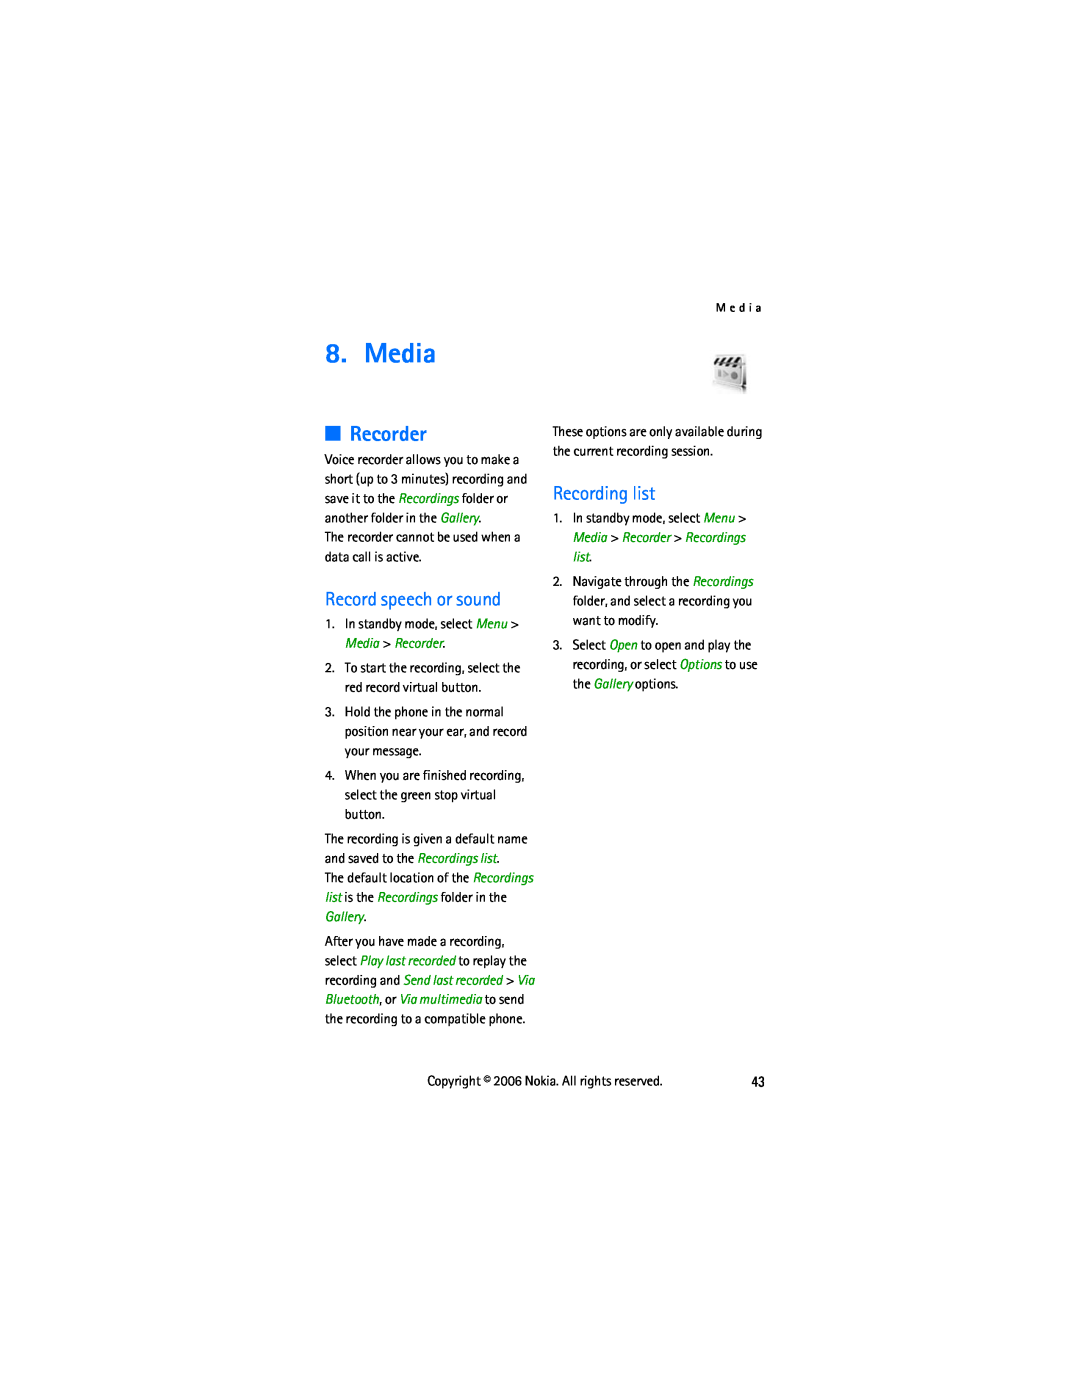 Nokia 2855 manual Media, Recorder, Record speech or sound, Recording list 